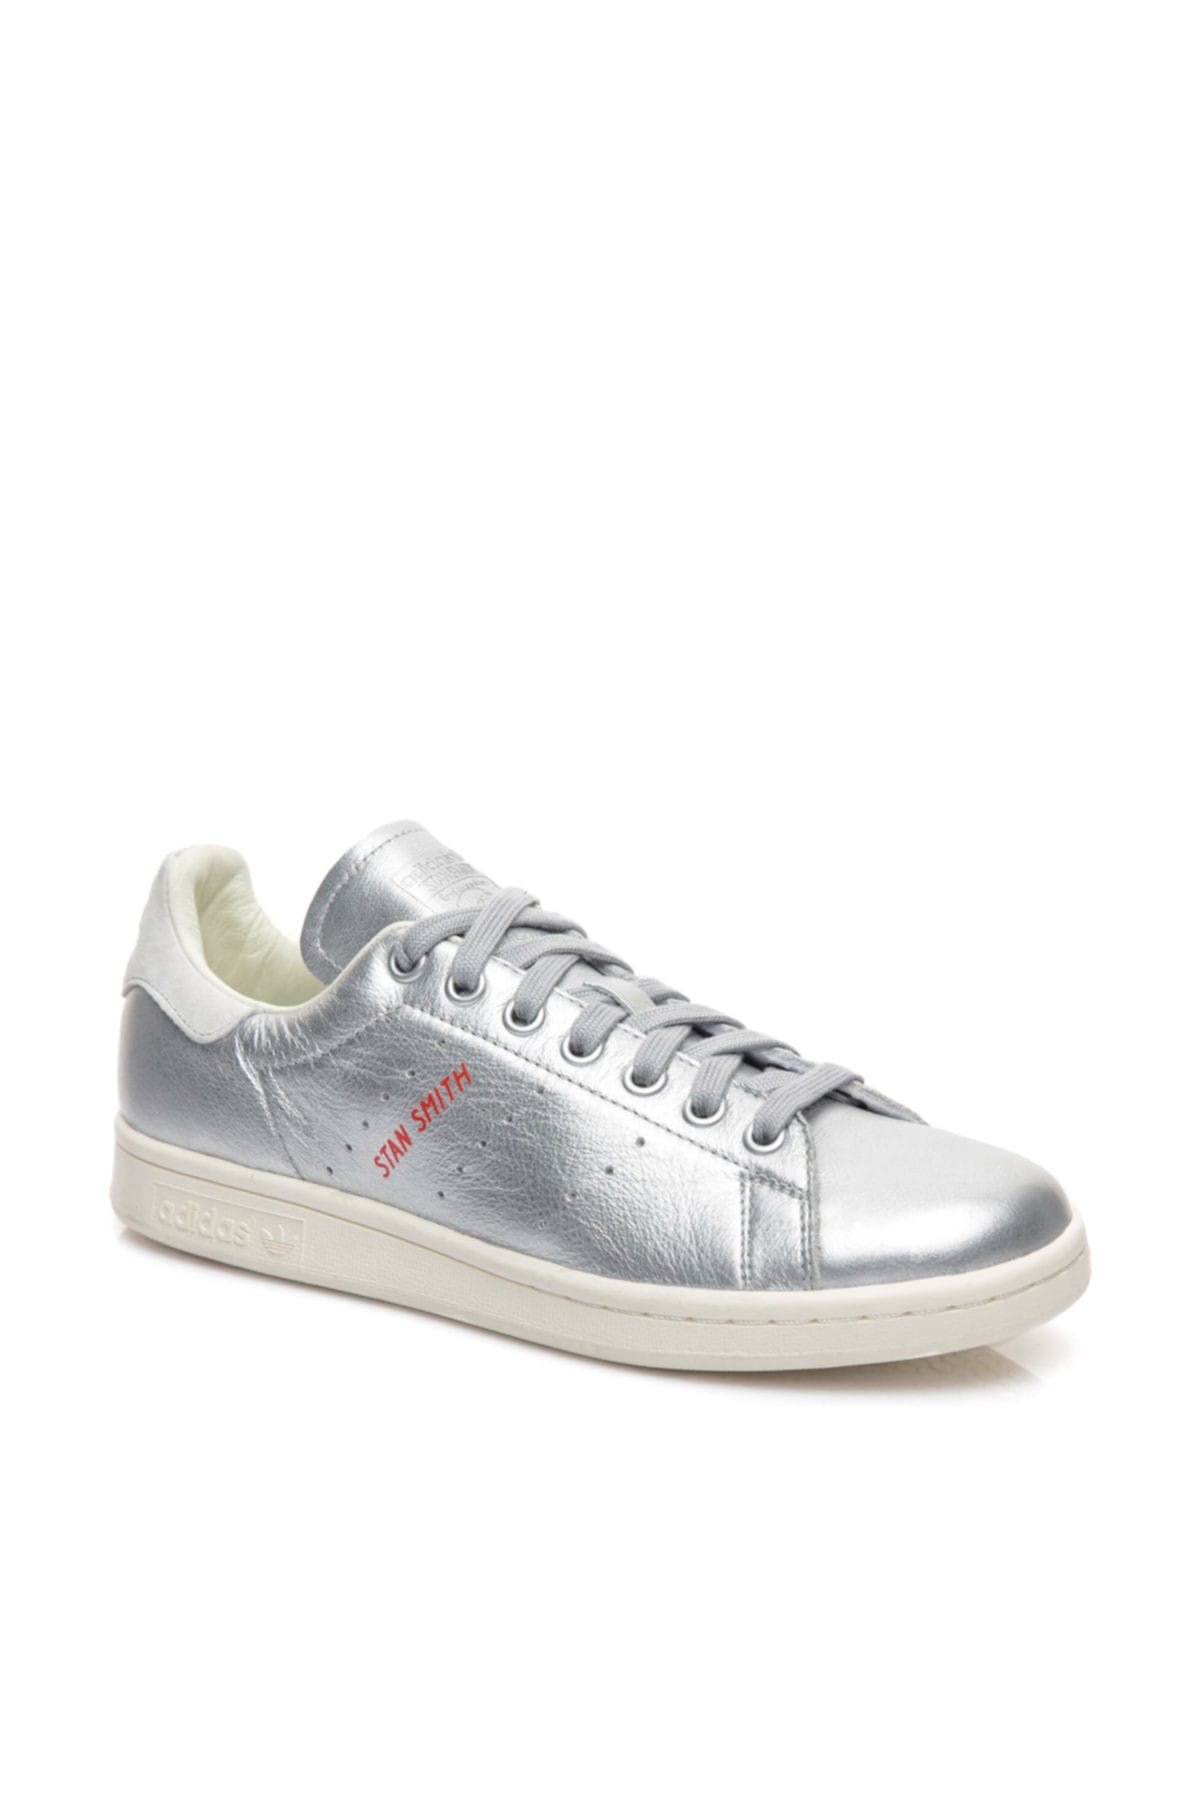 Adidas Stan Smith Sneakers Silver Bayan Spor Ayakkabı B41750